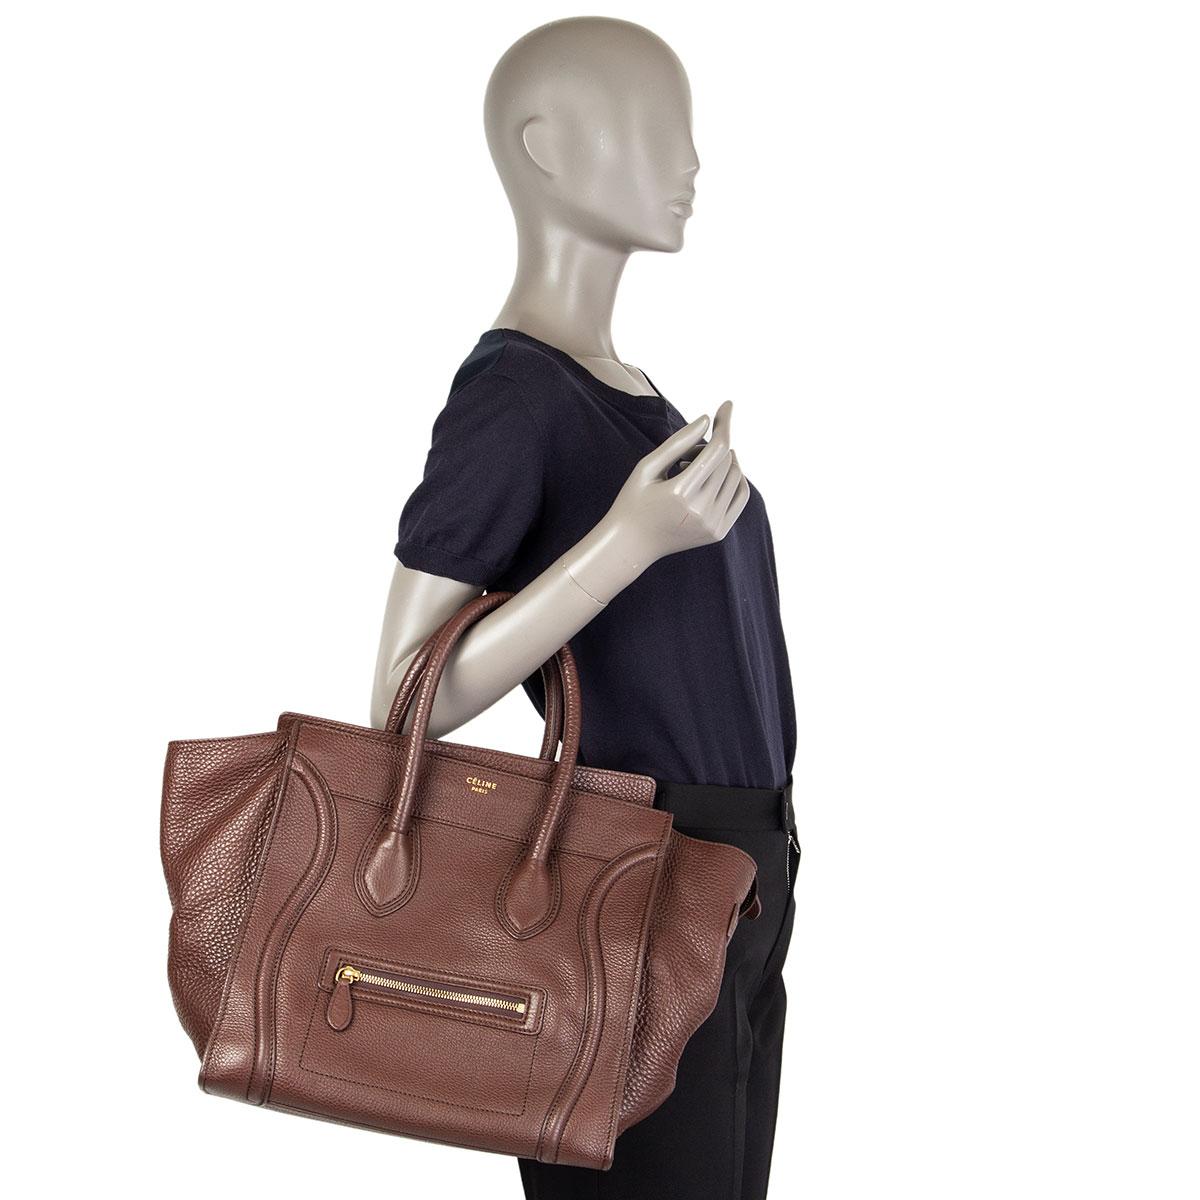 Women's CELINE chocolate brown leather MINI LUGGAGE TOTE Bag